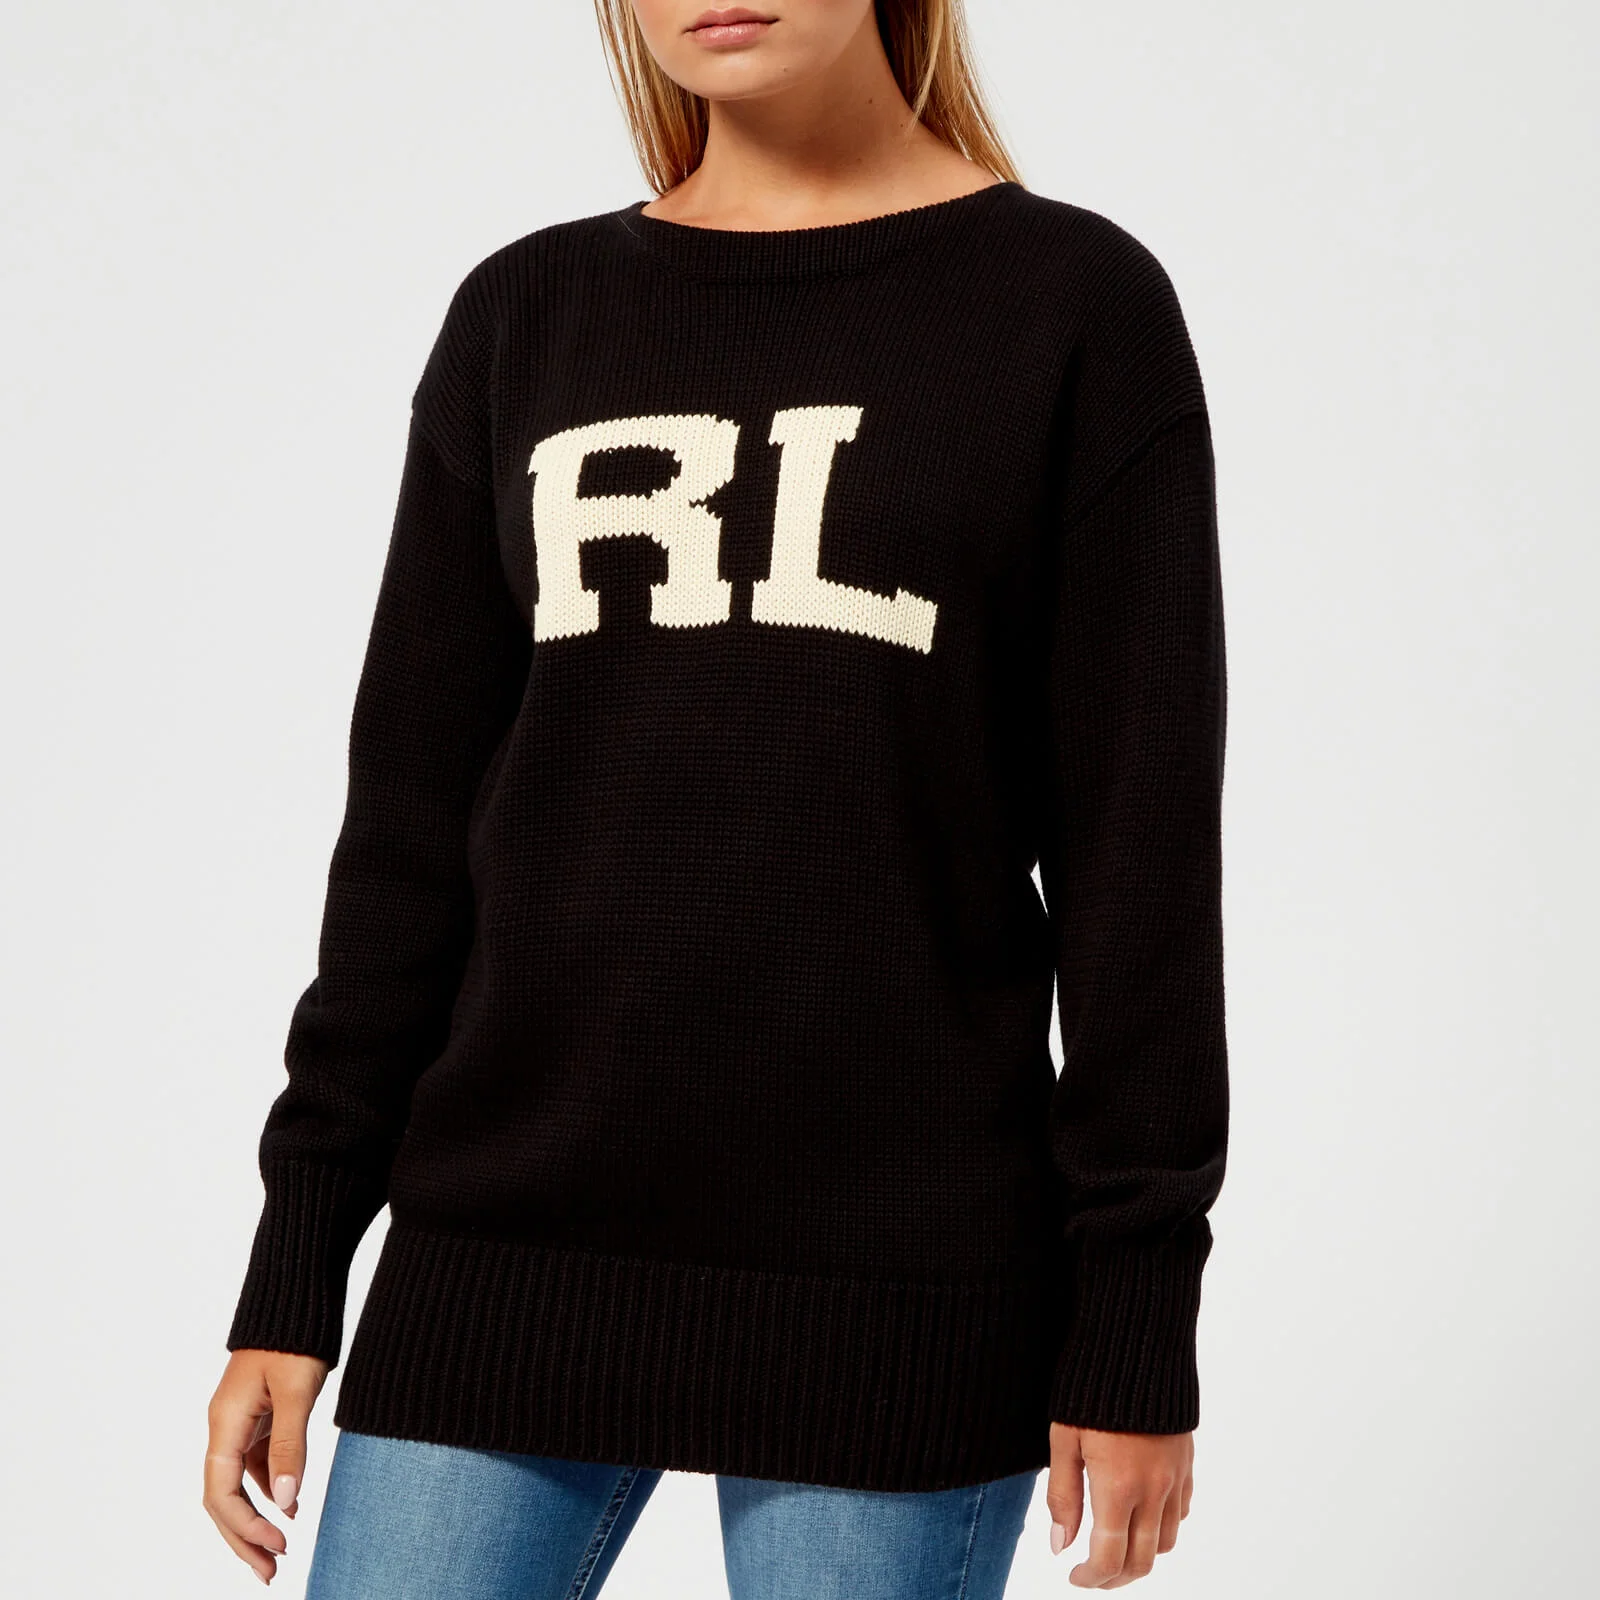 Polo Ralph Lauren Women's Rl Long Sleeve Sweatshirt - Black/Cream Image 1